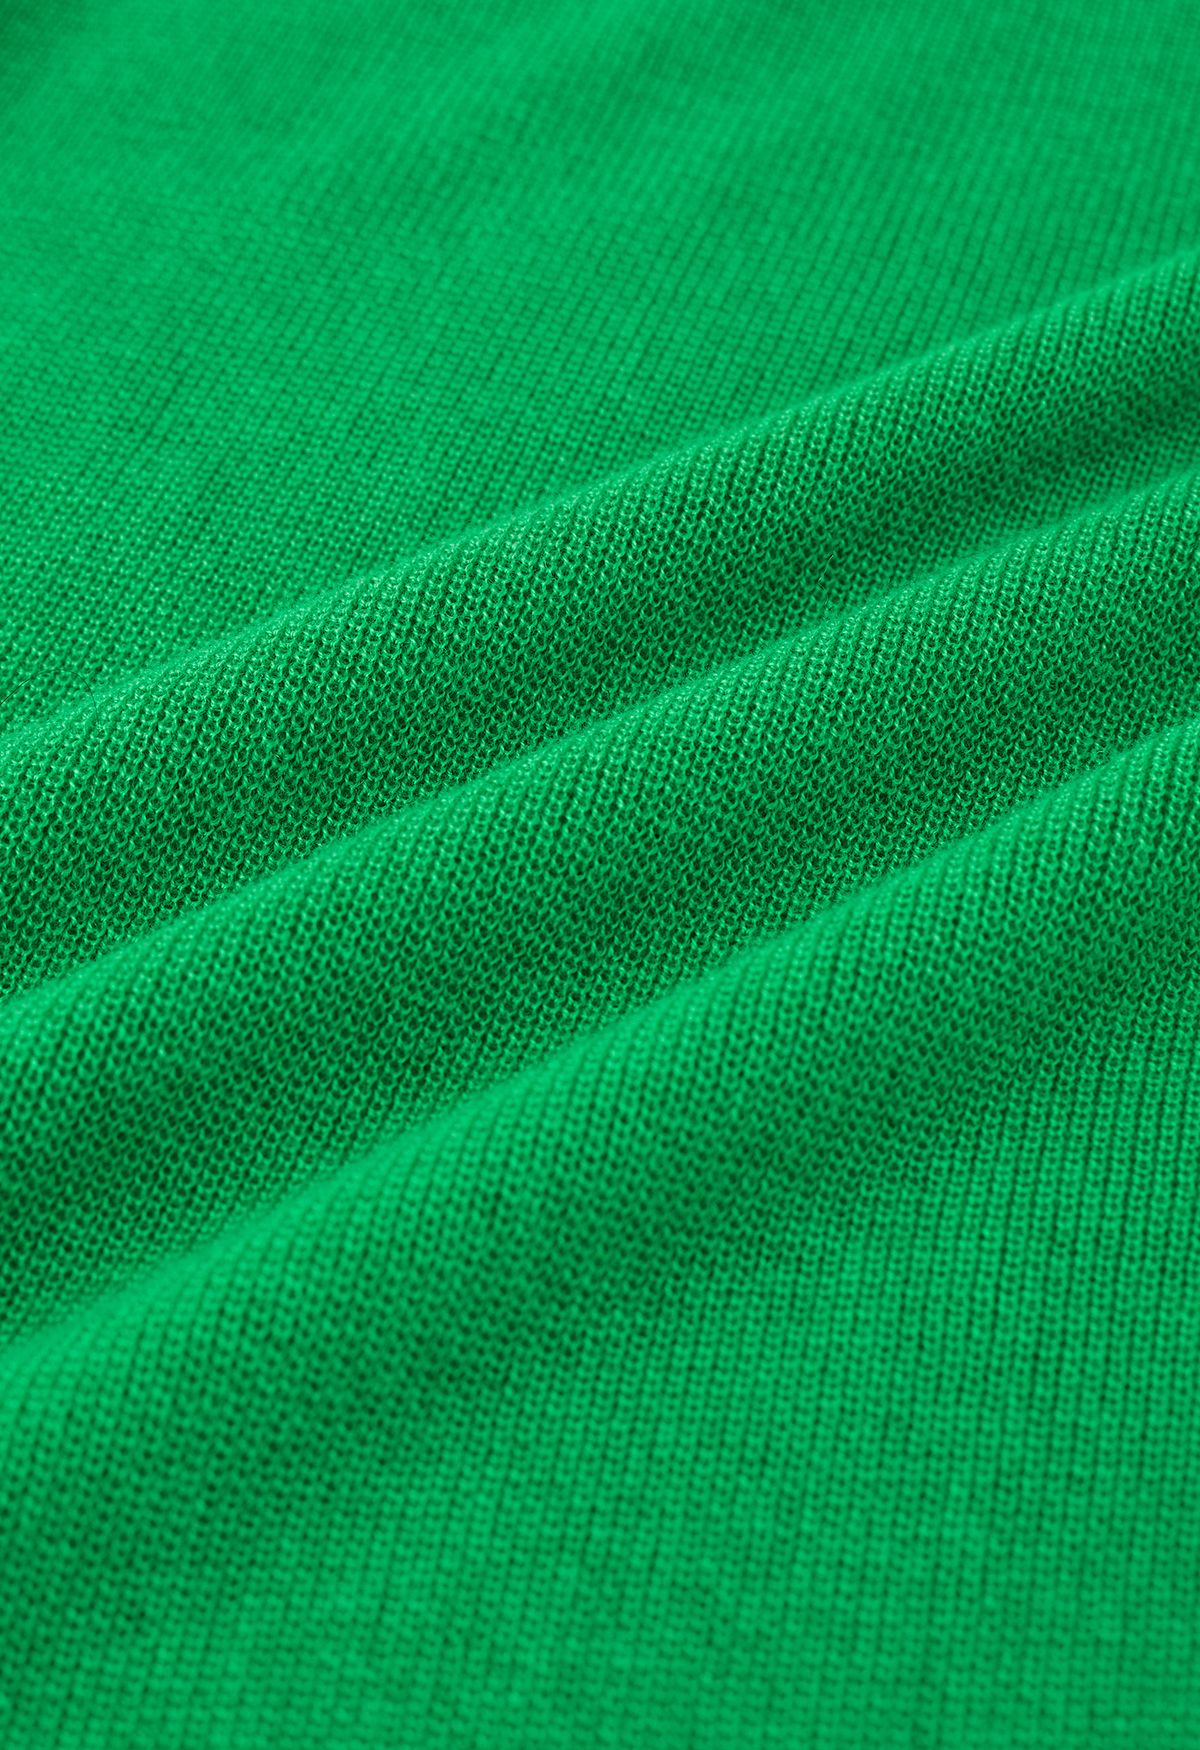 Knitted High Waist Pencil Maxi Skirt in Green